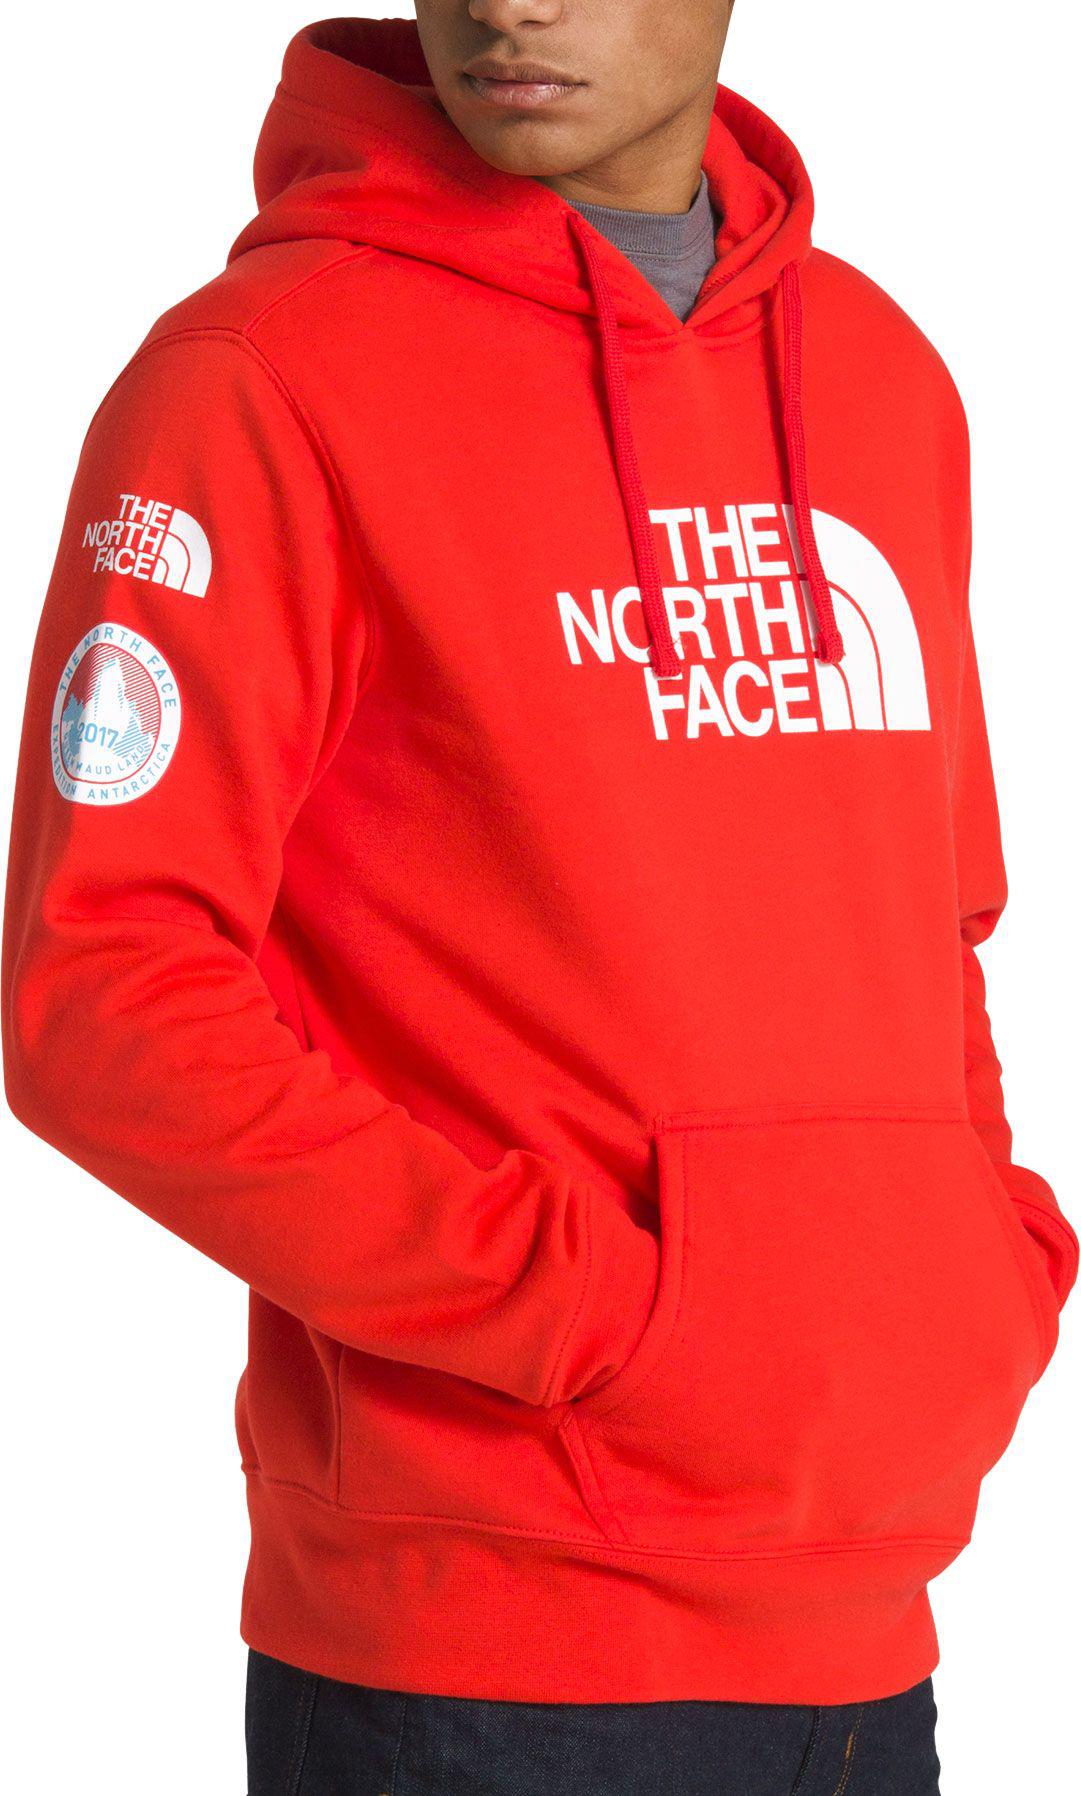 north face antarctica hoodie